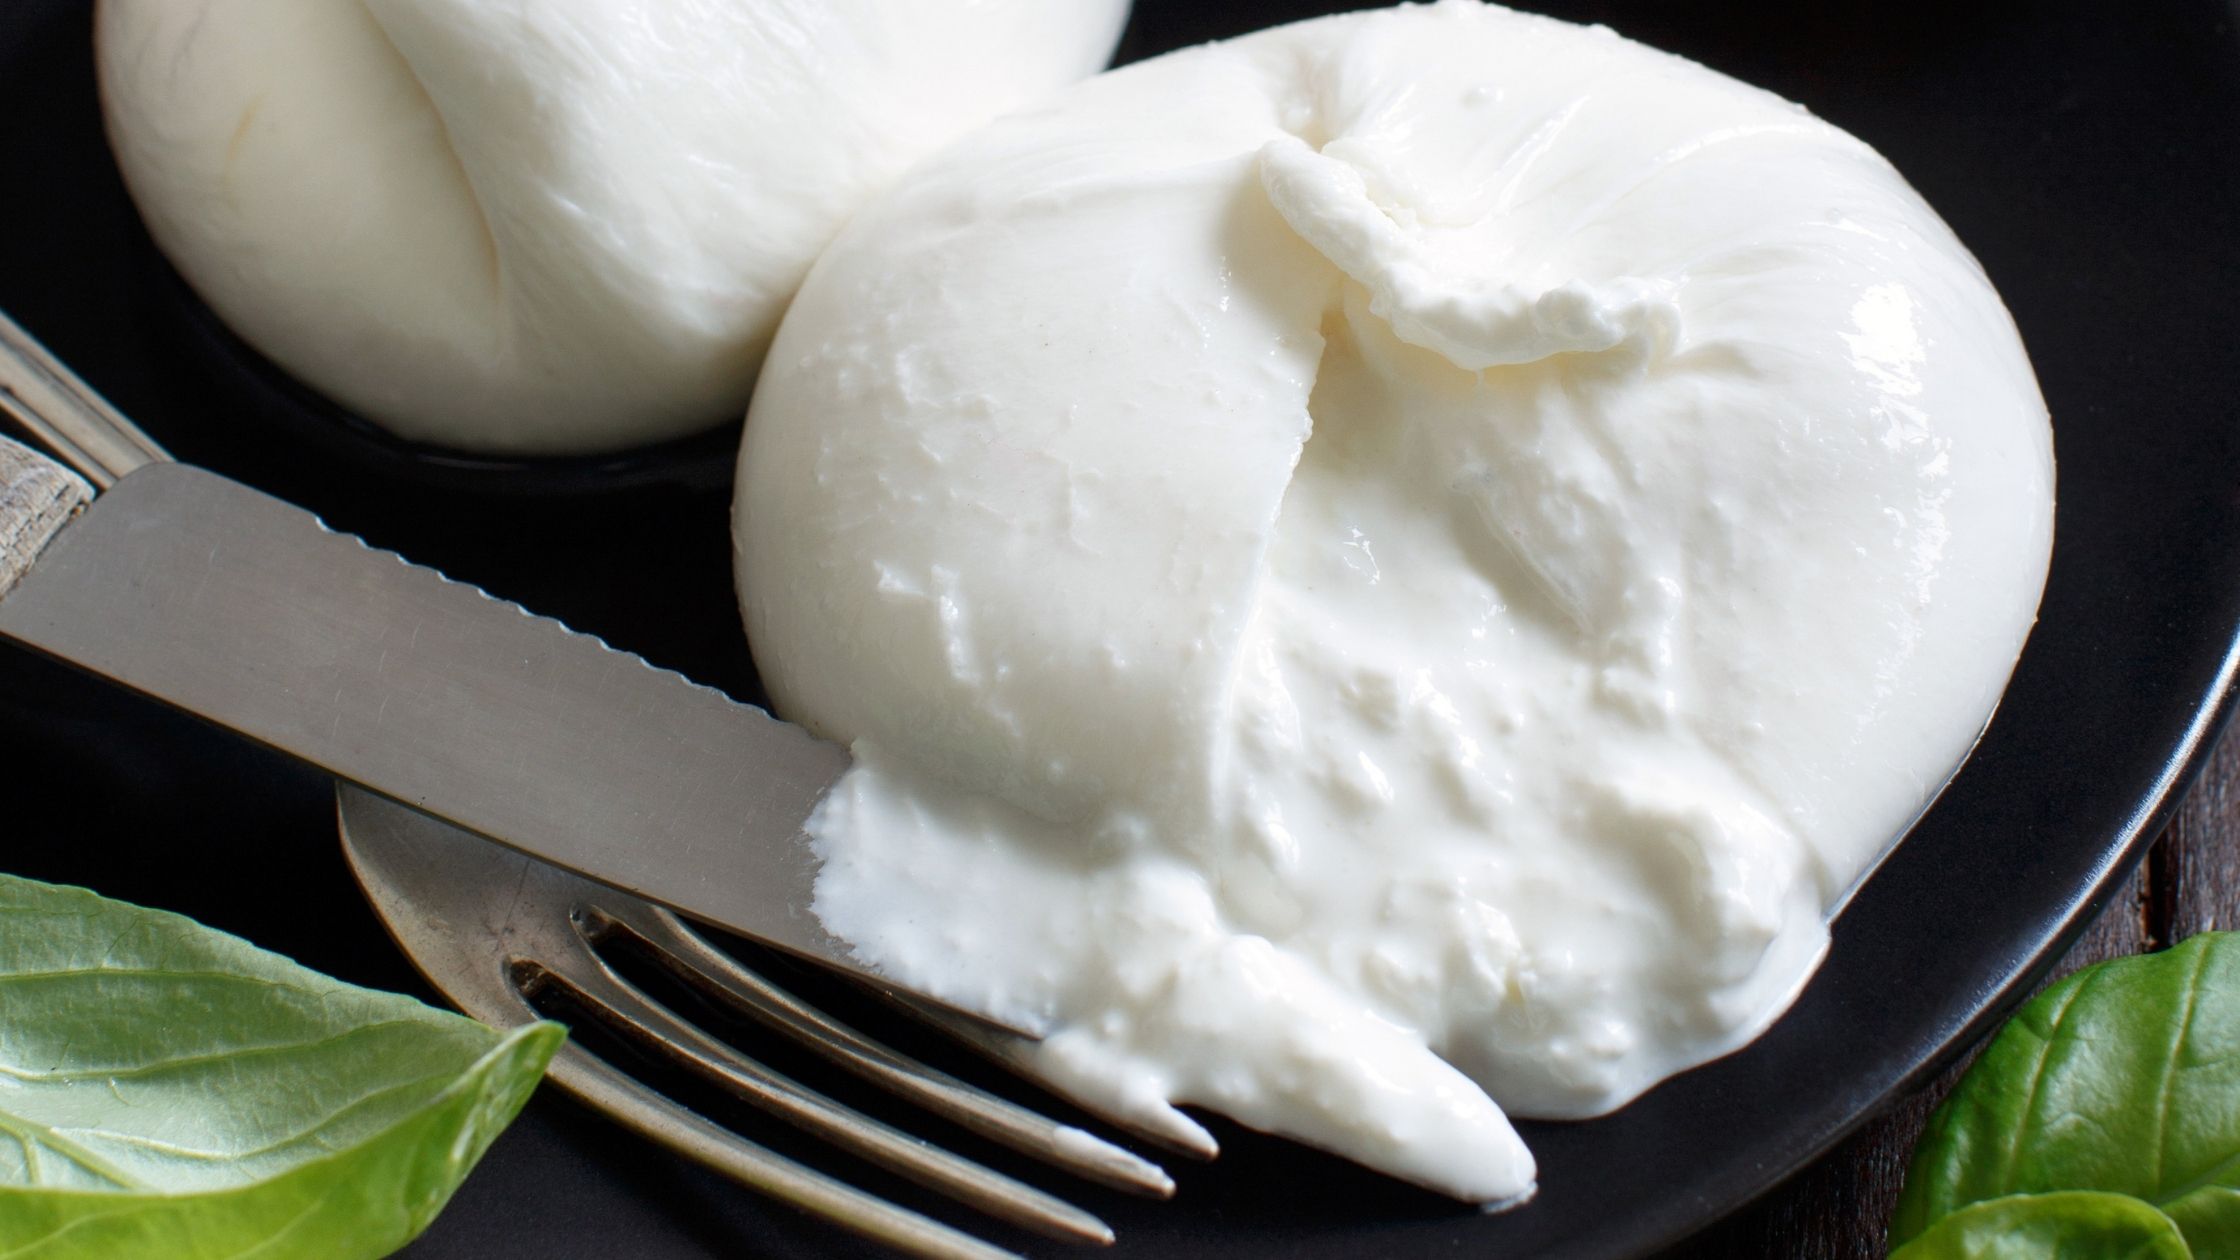 Burrata Cheese vs Mozzarella: Decoding the Creamy Cheese Conundrum